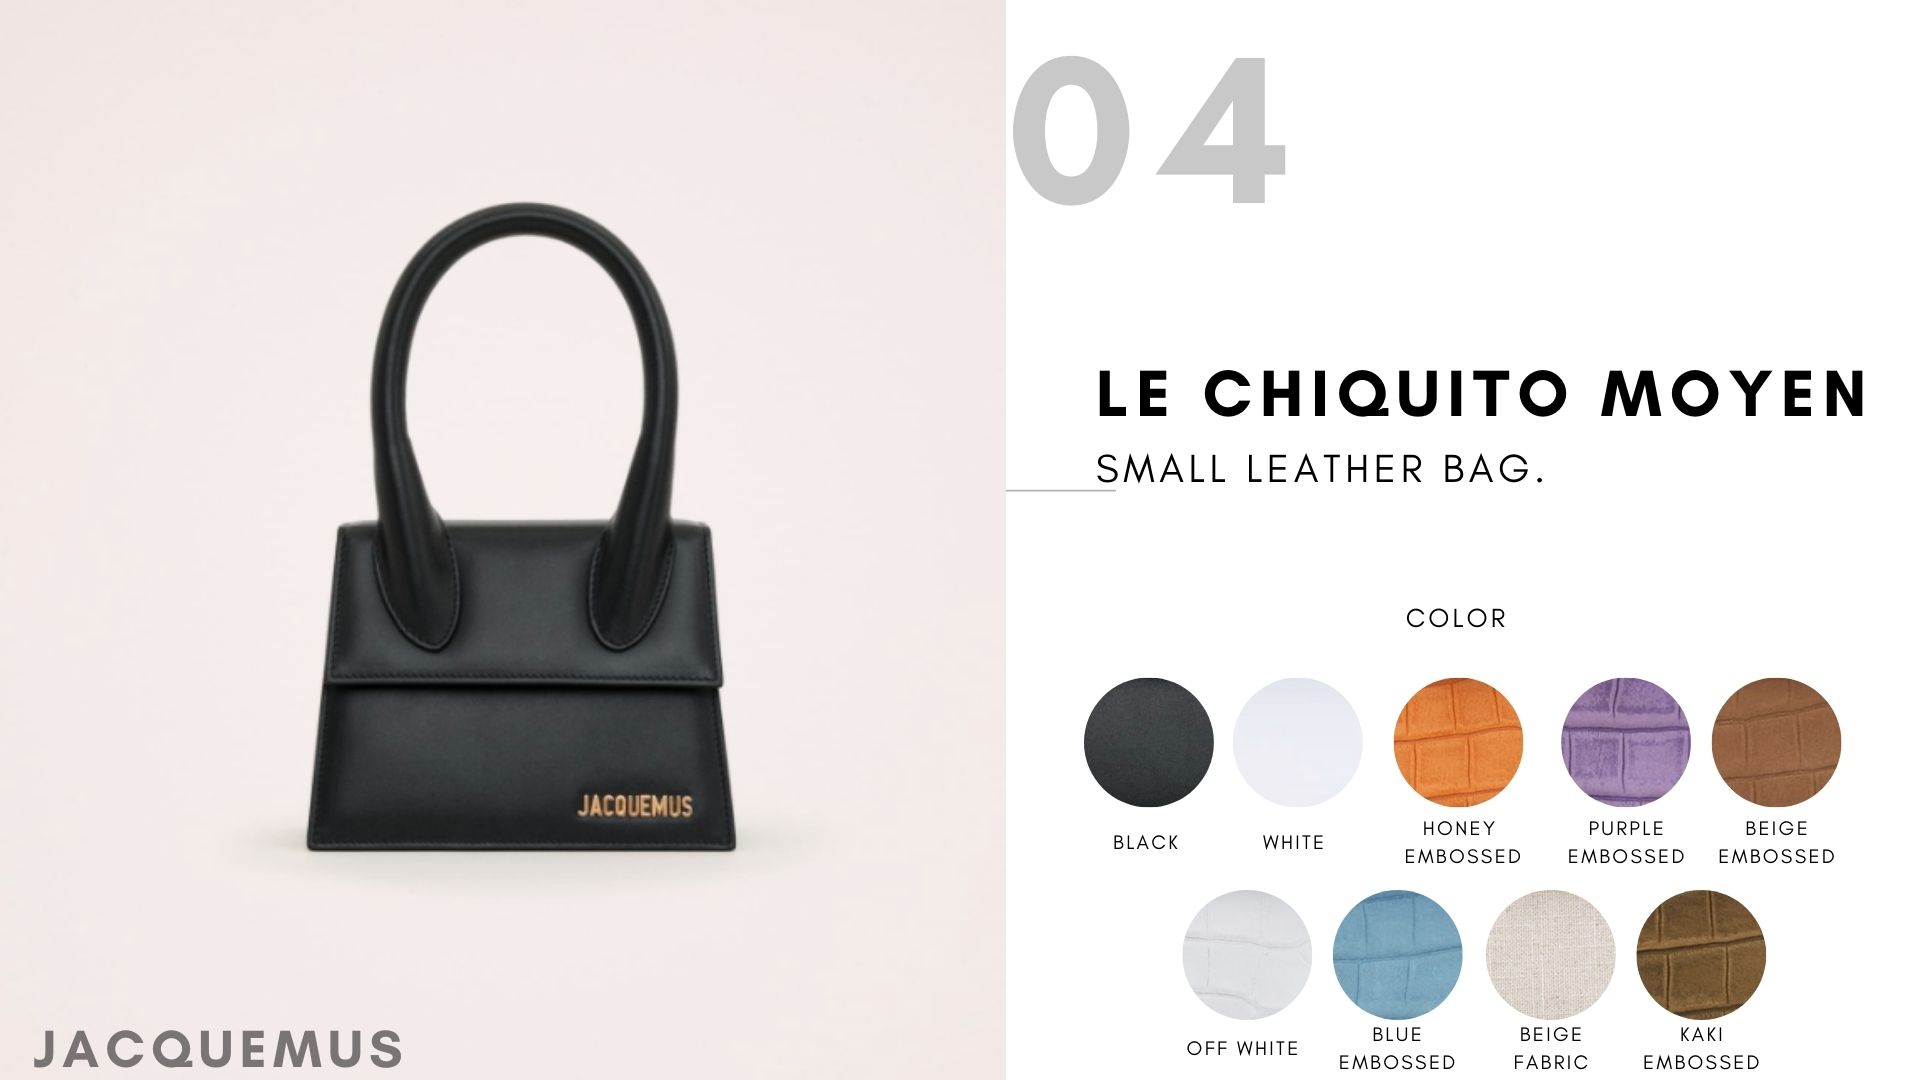 Le Chiquito moyen Small leather bag.